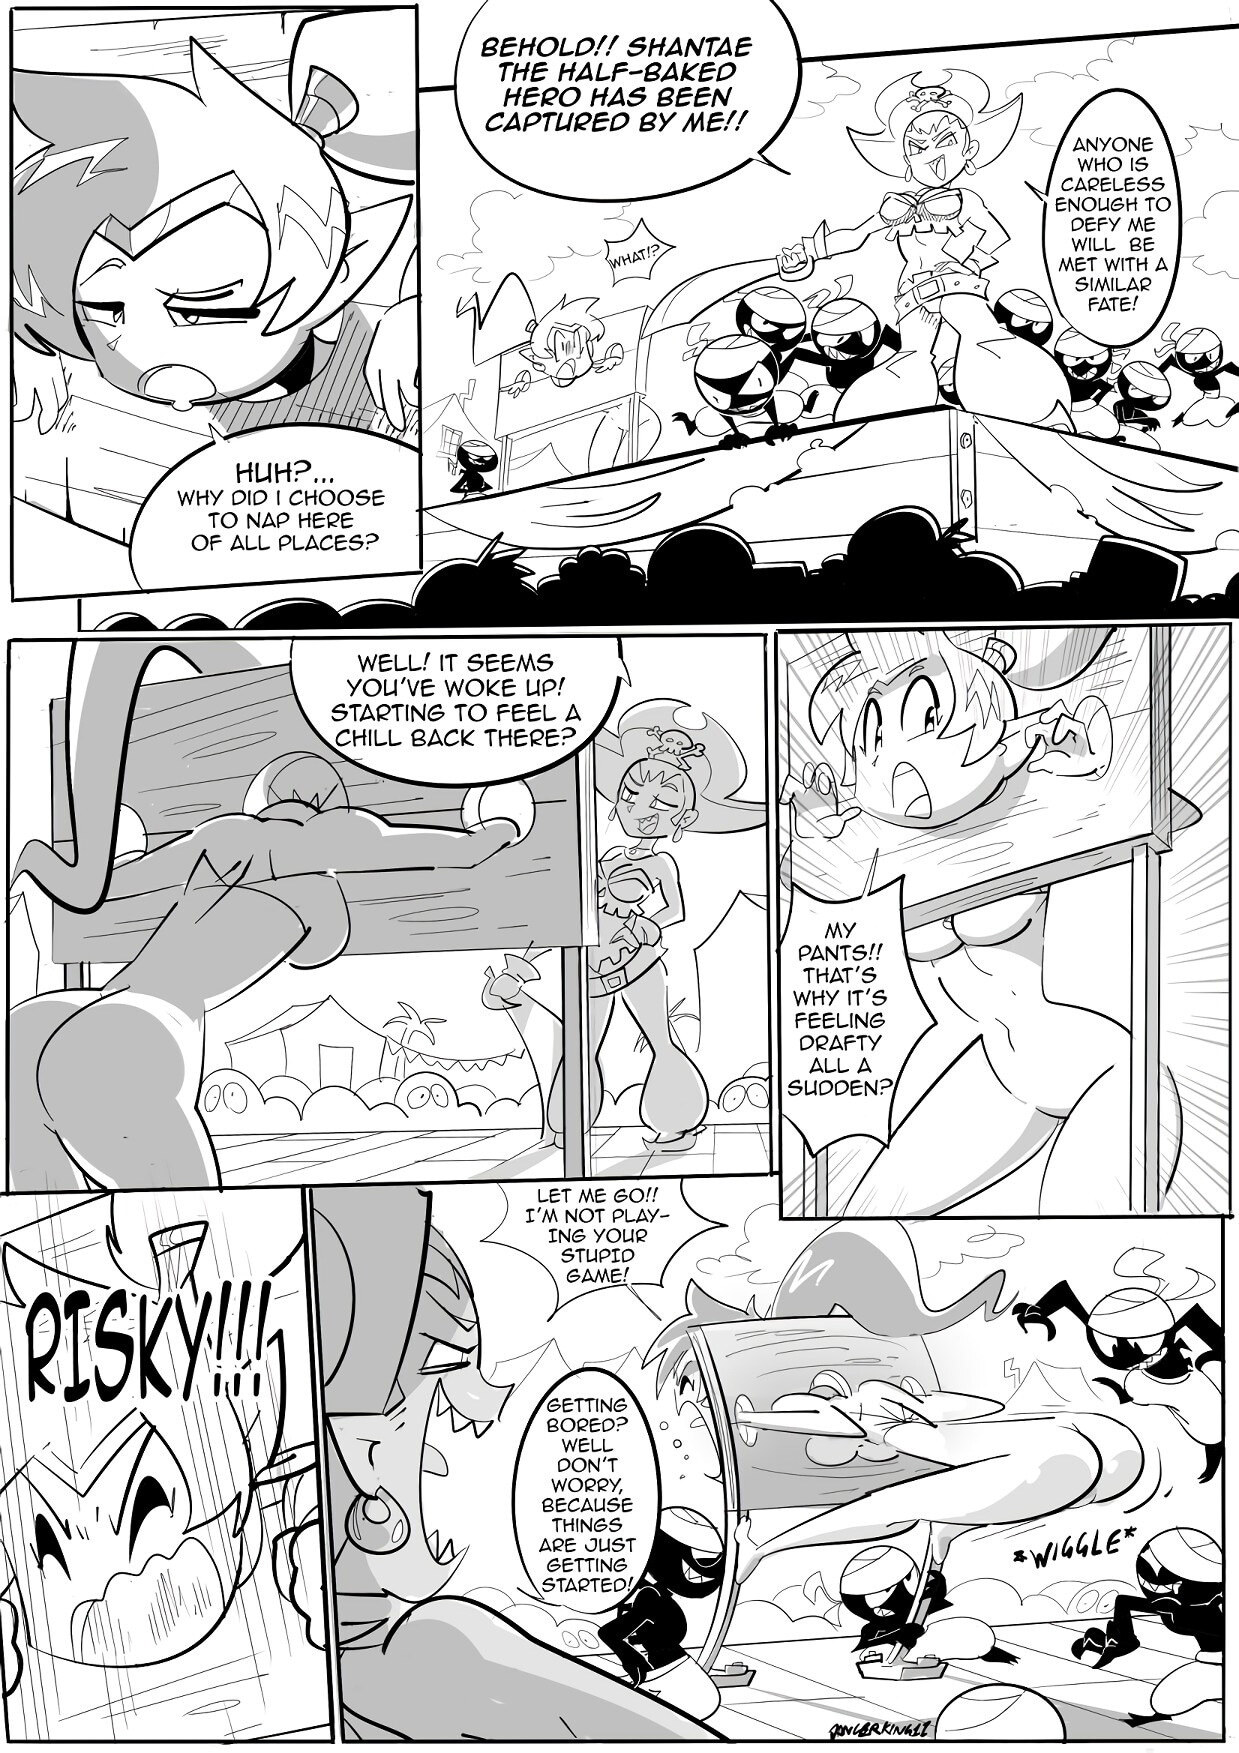 Shantae and Risky's Revenge - Page 1